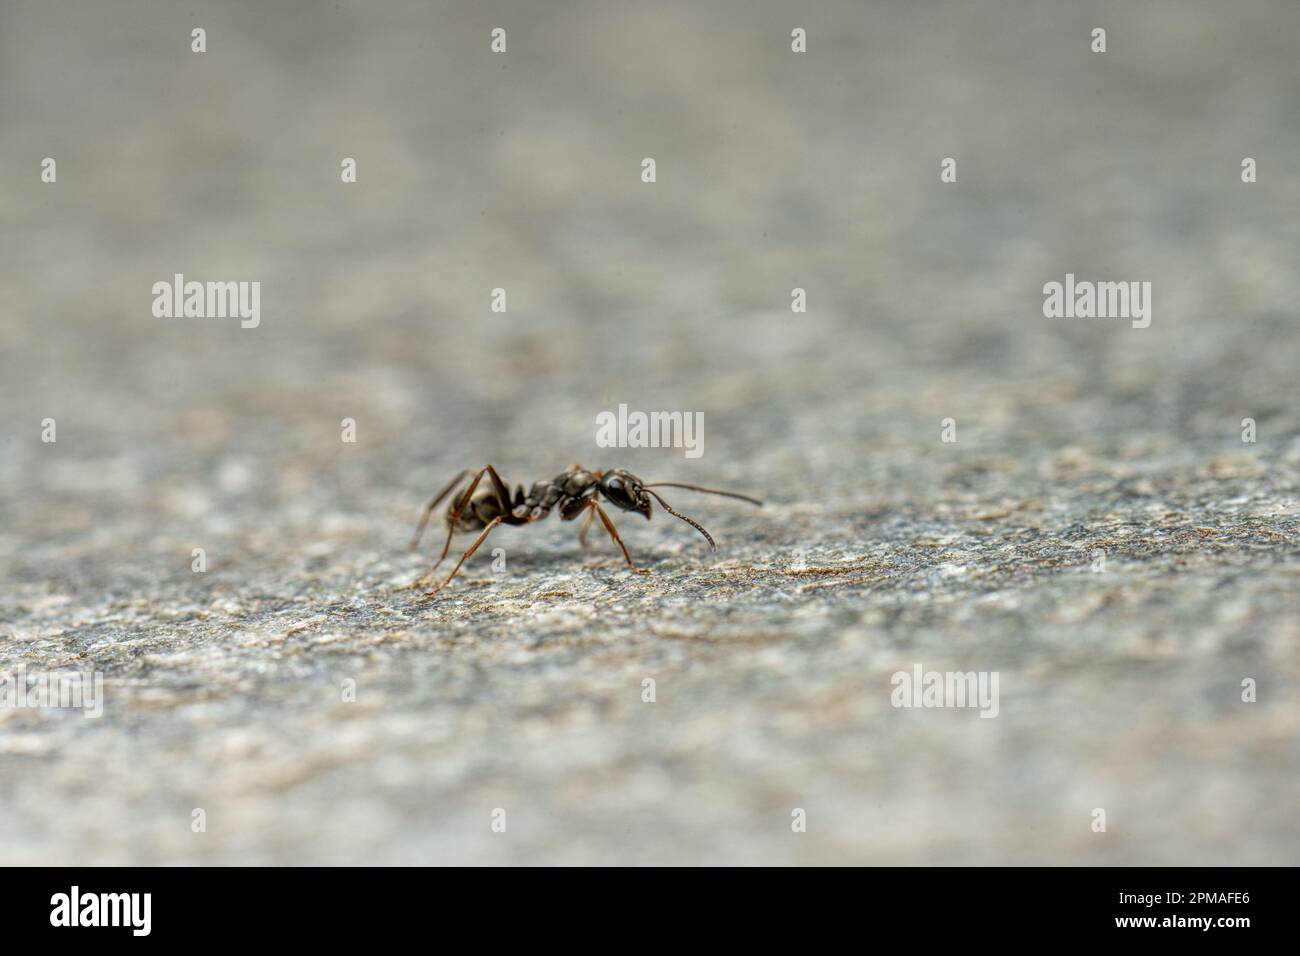 Tiny black ant strolling across a stone platter Stock Photo